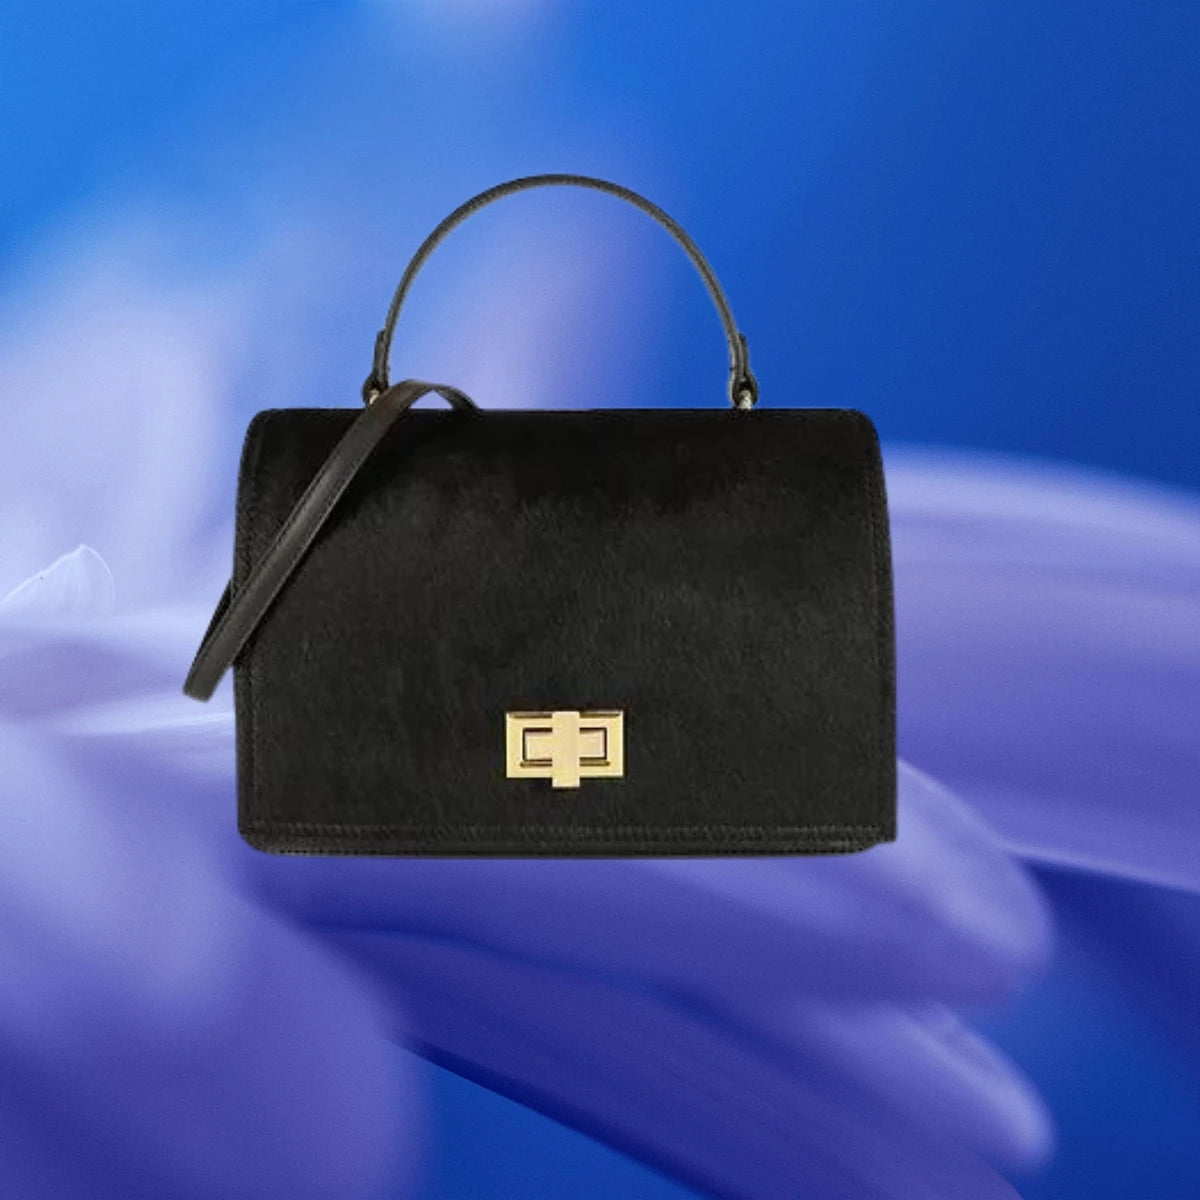 Replica Celine Bags Outlet Sale - Designer Celine Luggage Tote Handbags  Mini Online Store